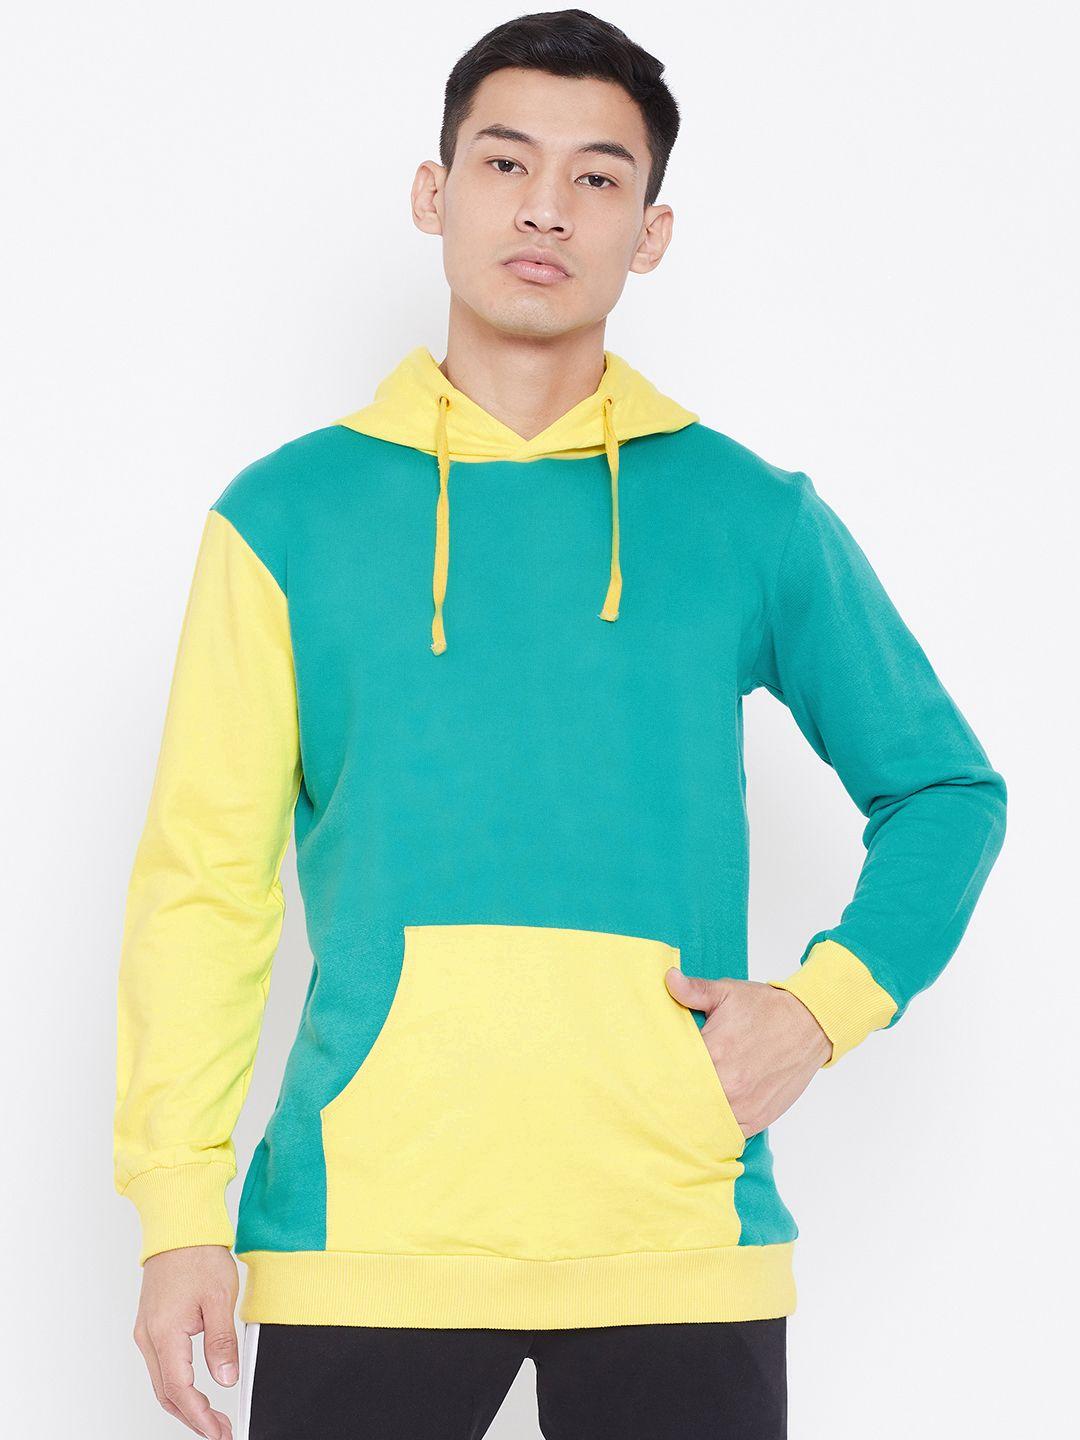 aesthetic bodies men yellow & teal green colourblocked hooded sweatshirt